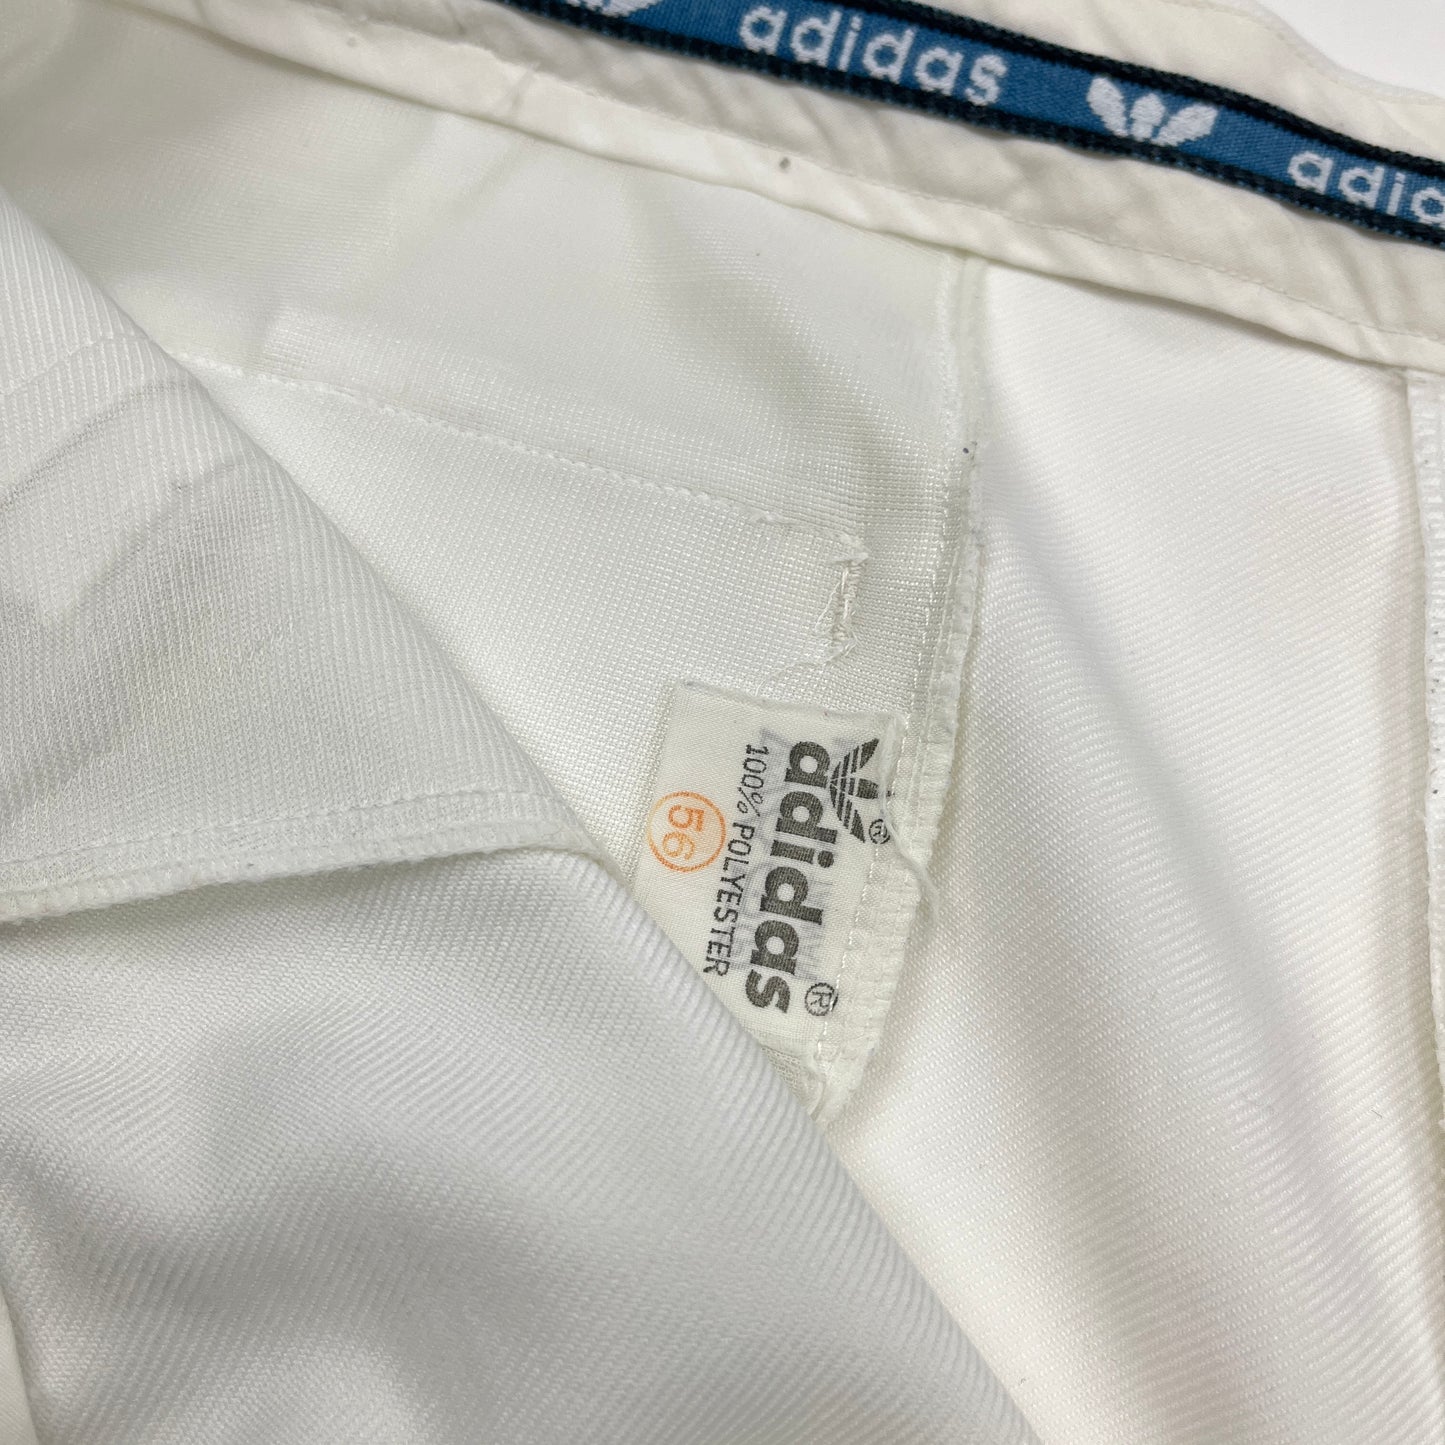 01695 Adidas Vintage Tennis Shorts